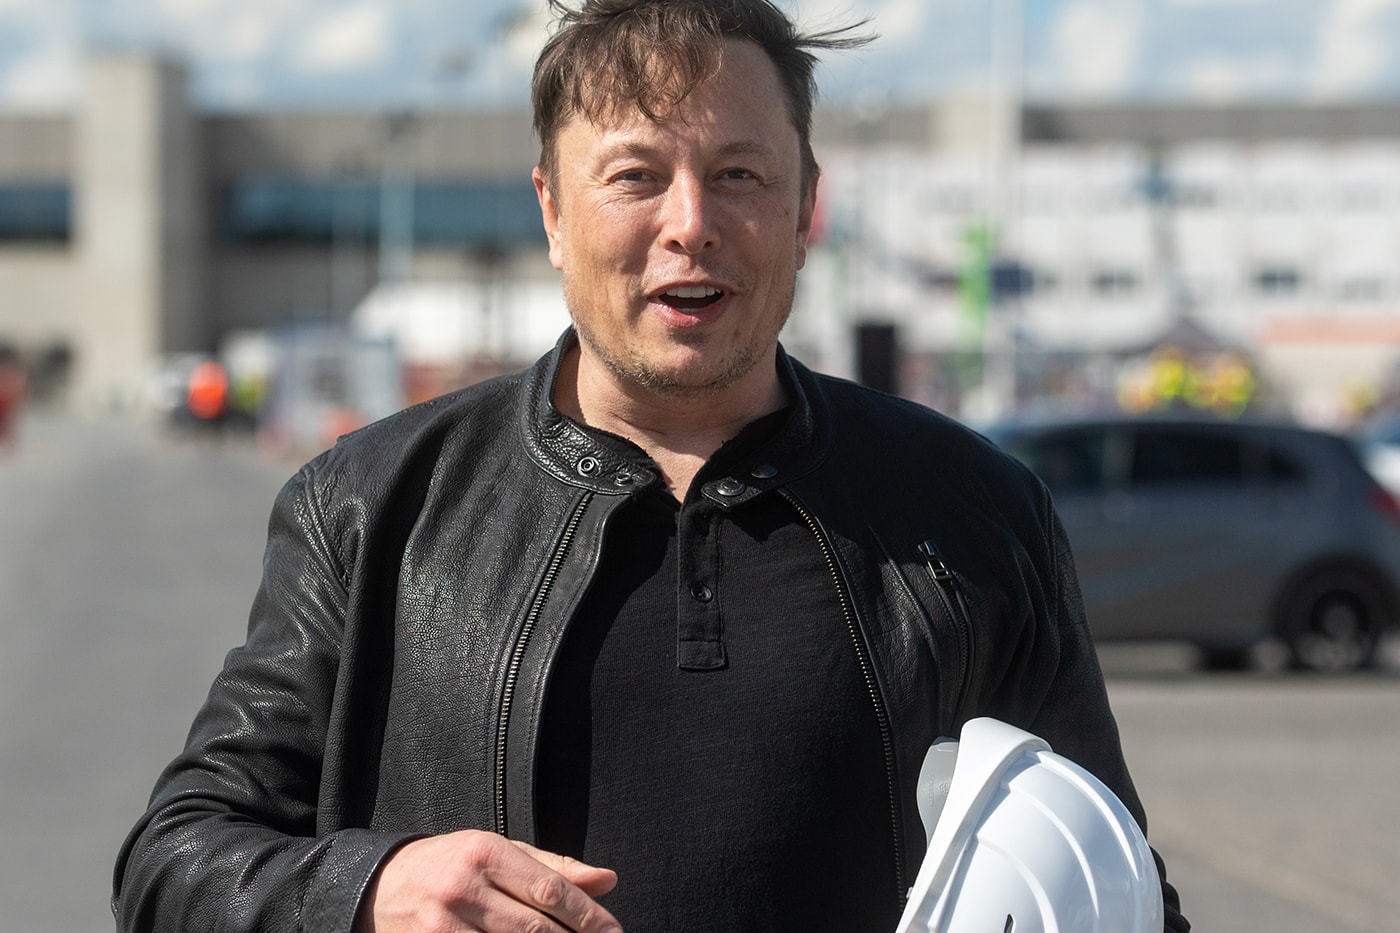 Elon Musk Boxabl 50k usd home Boca Chica texas tweet prefab homes environment house Galiano Tiramani ipo Starbase SpaceX